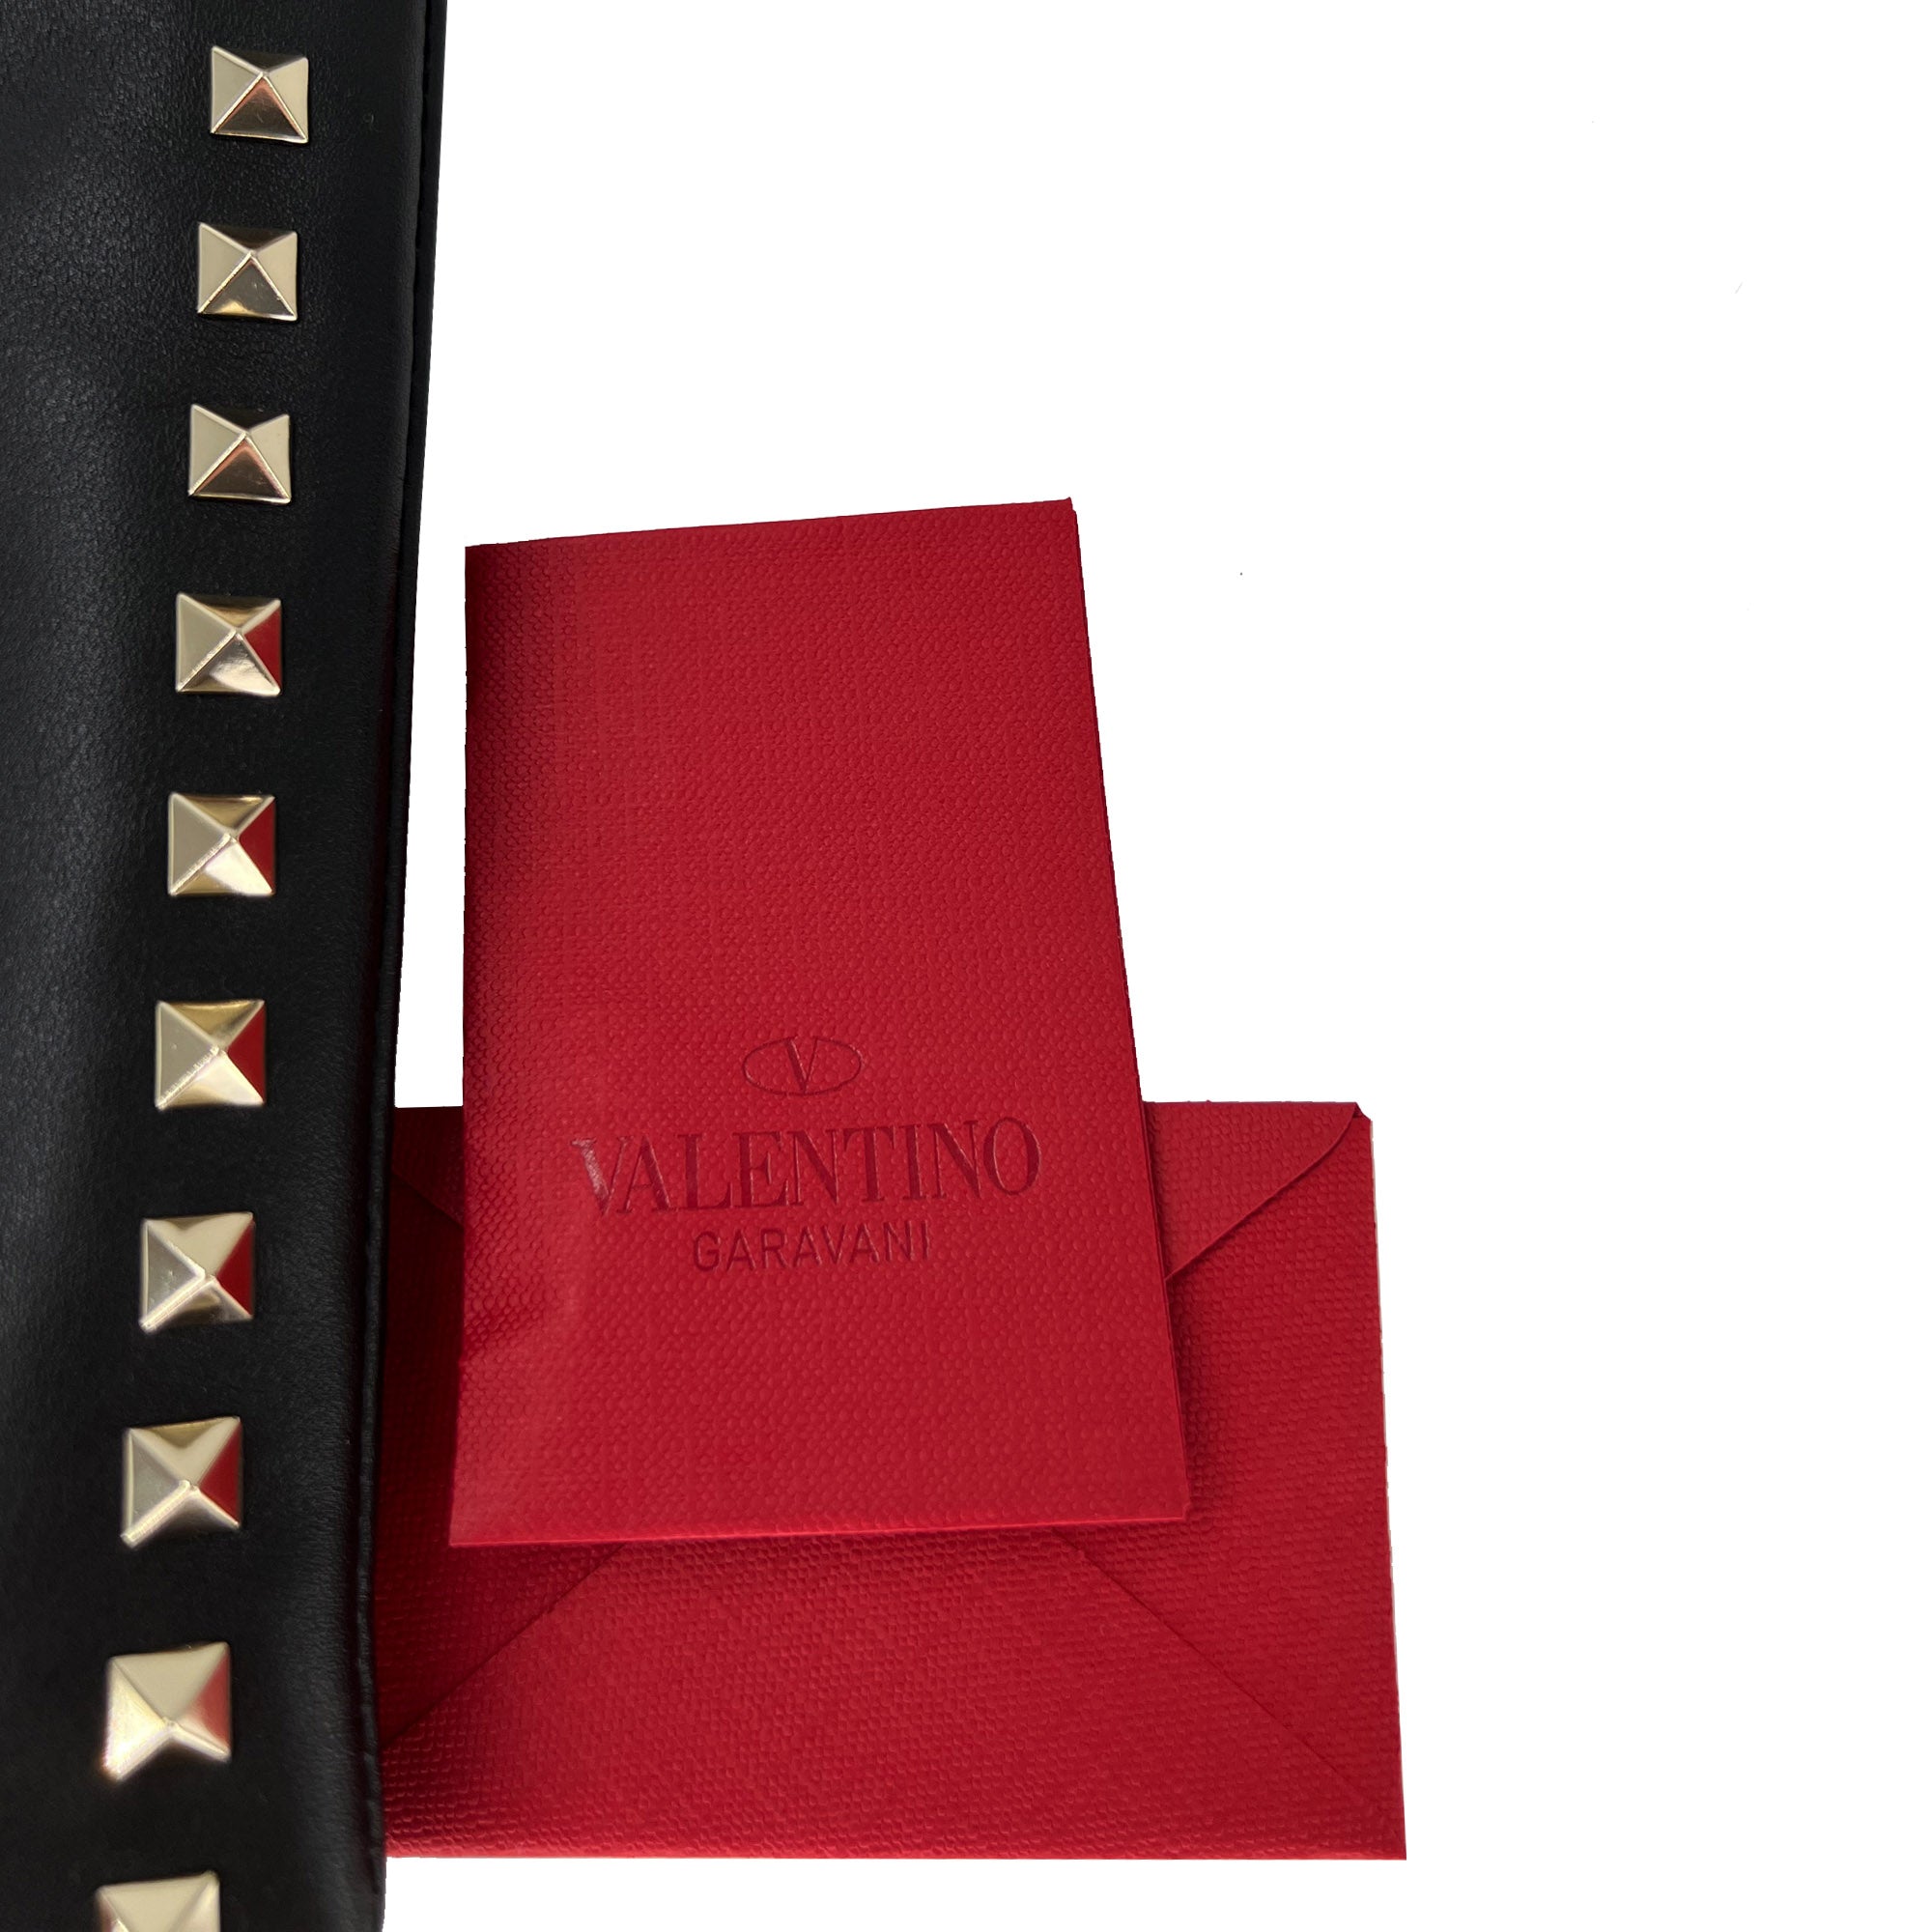 Valentino Garavani Rockstud large leather pouch